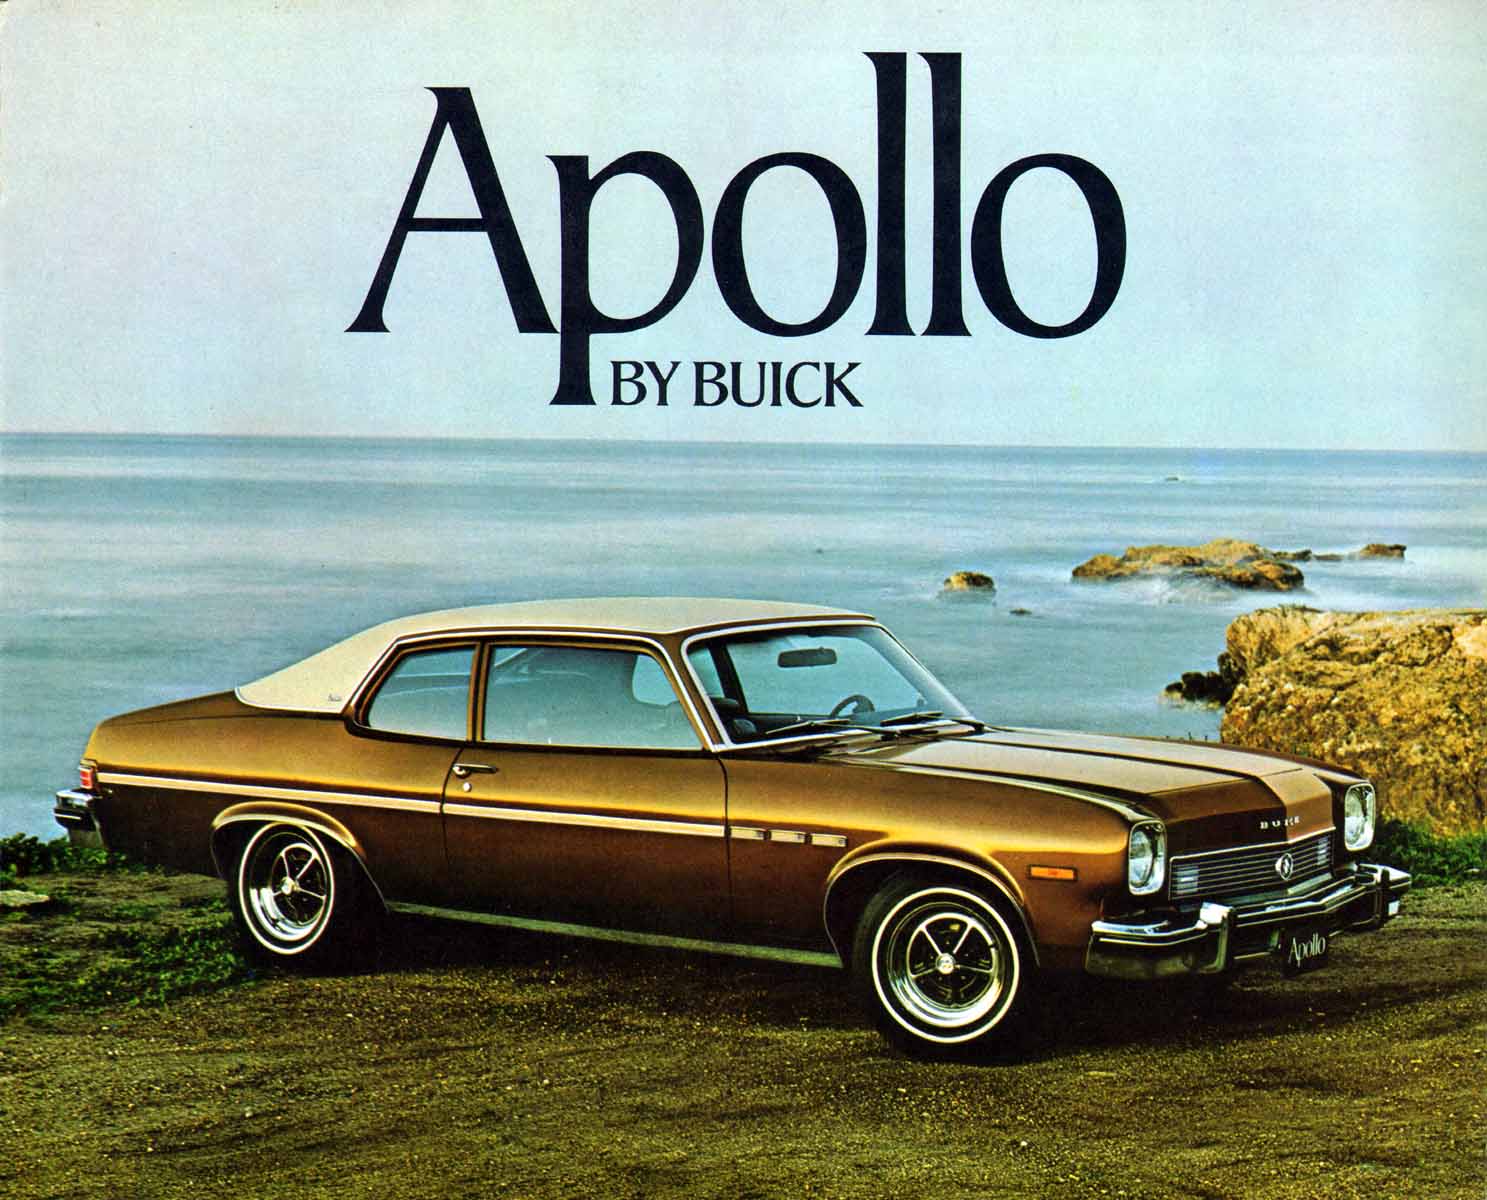 1973 Buick Apollo-01